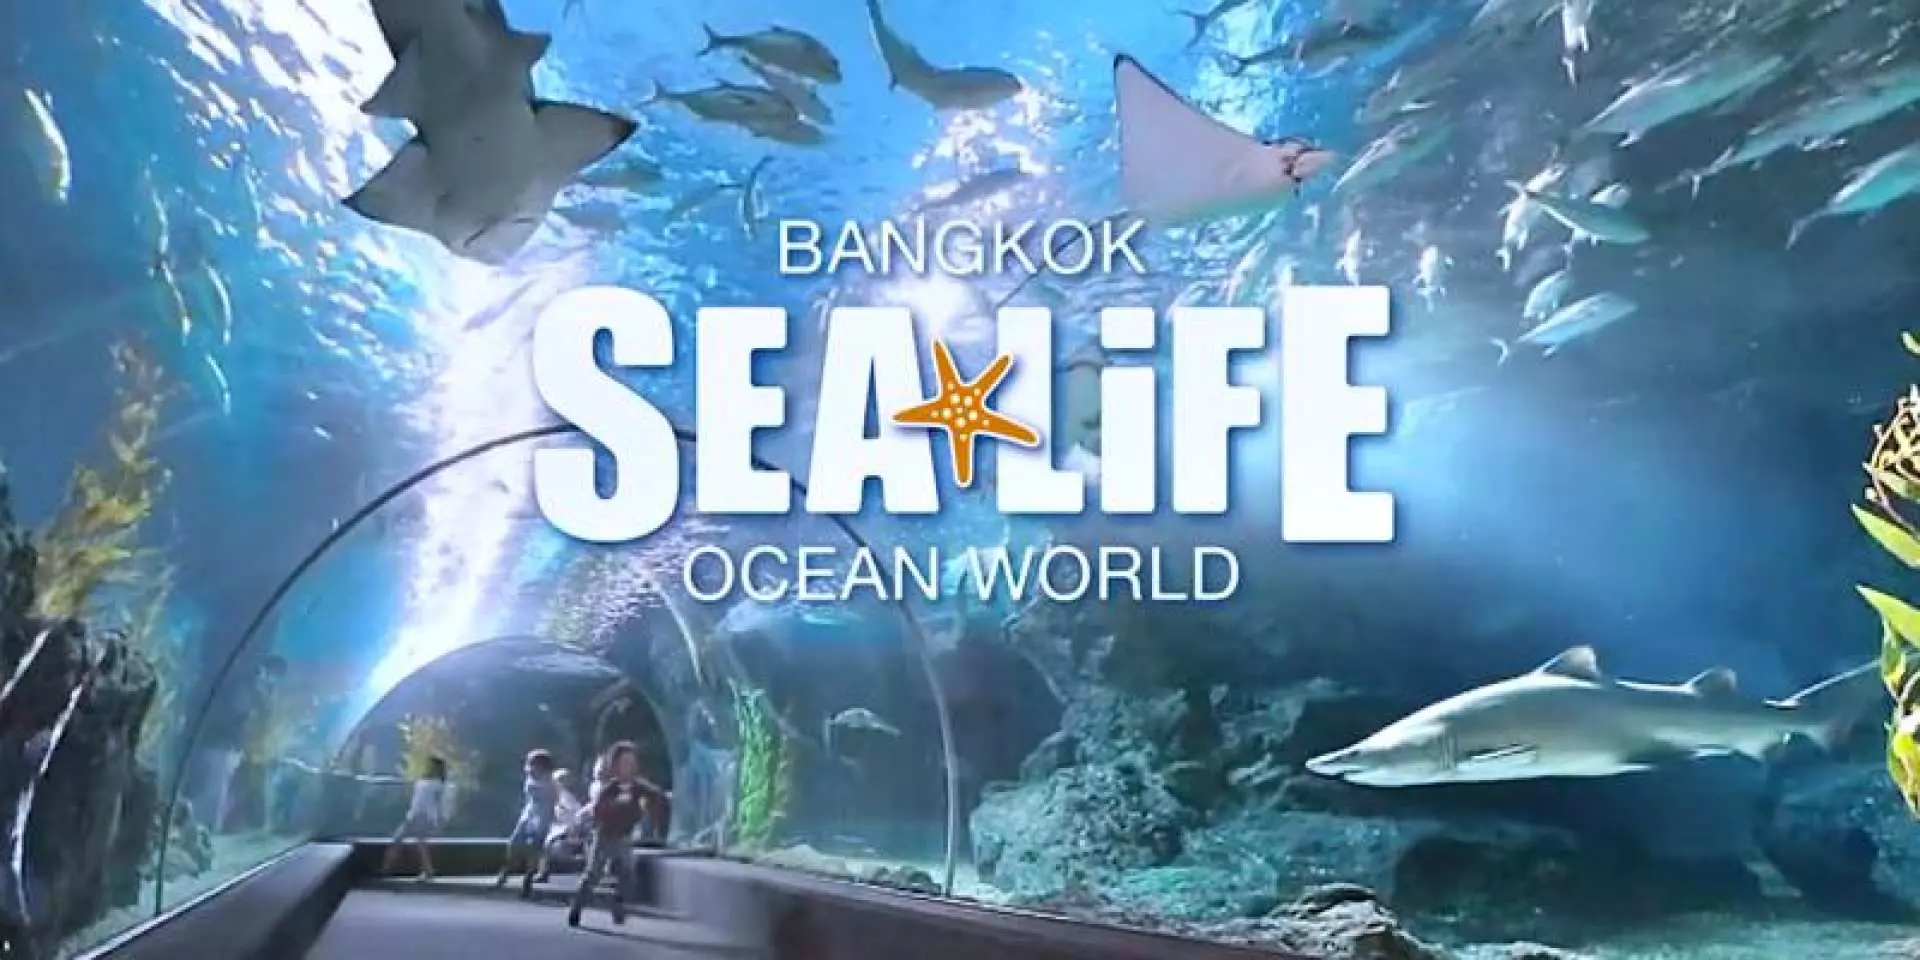 曼谷暹羅海洋世界
Sea Life Bangkok Ocean World